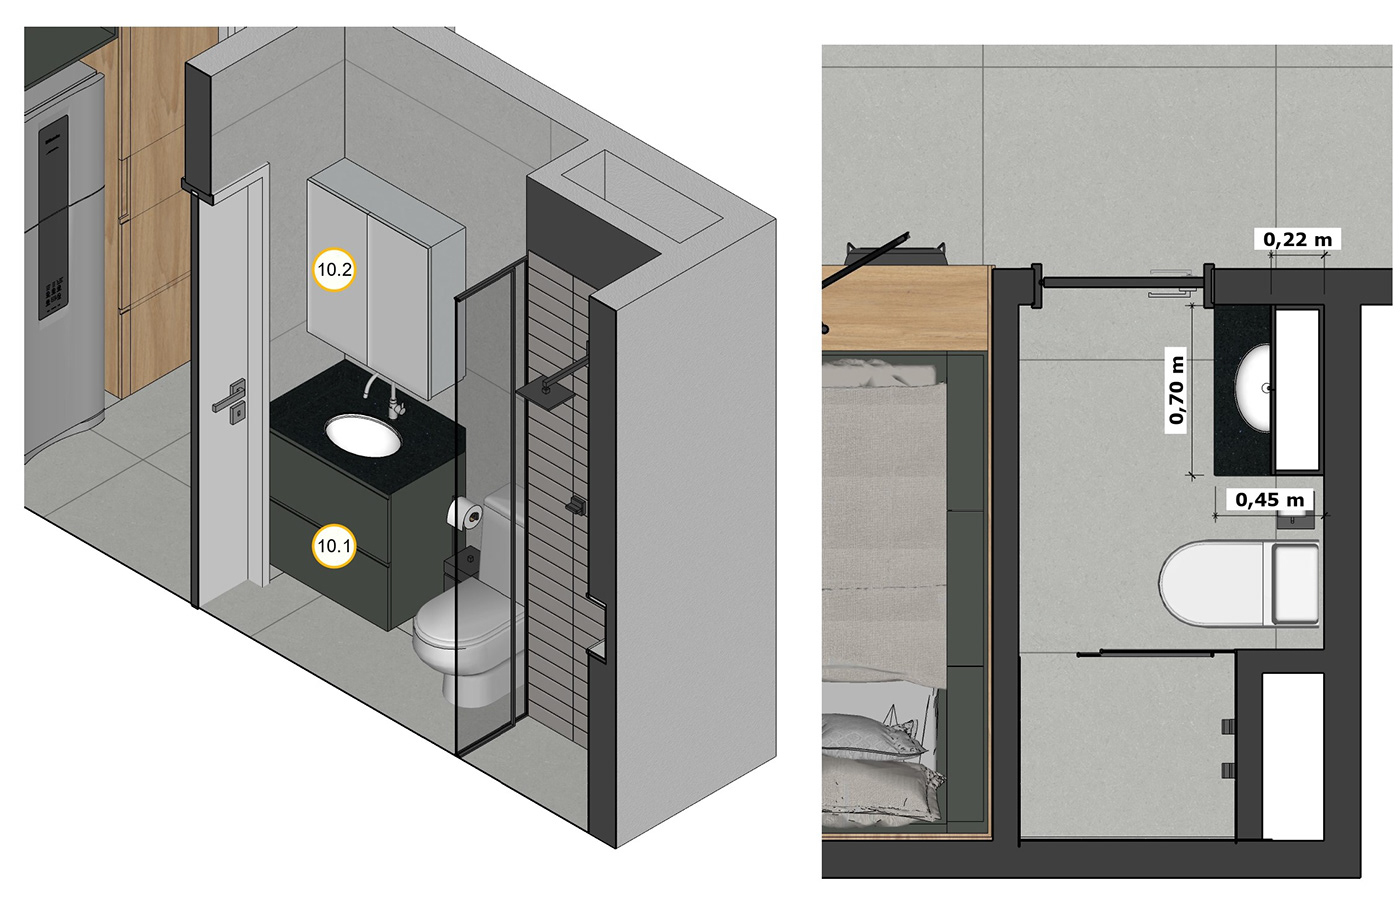 ARQUITETURA DETALHAMENTO EXECUTIVO interiores Layout marcenaria projeto SketchUP